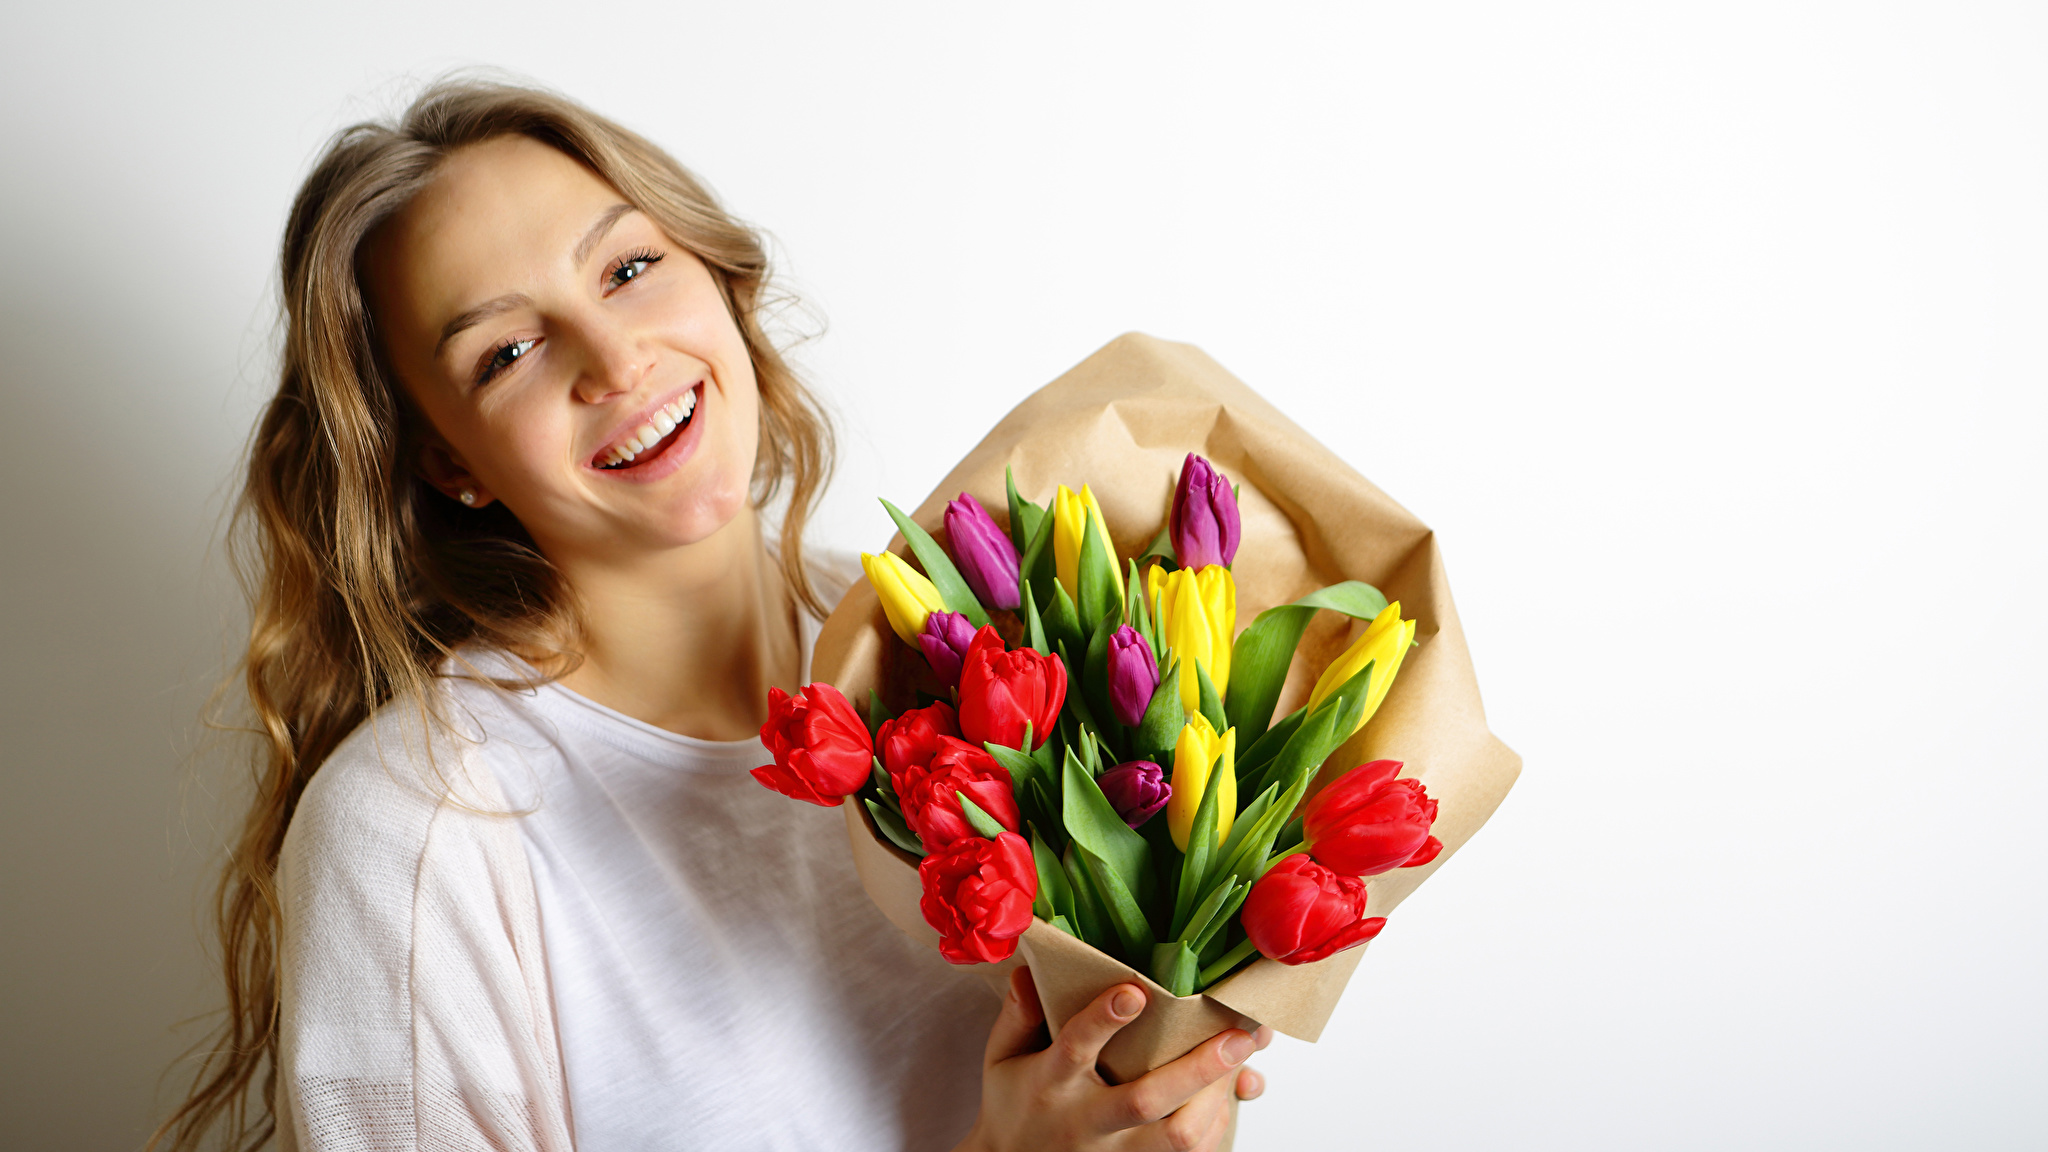 Фото на аву девушка с тюльпанами